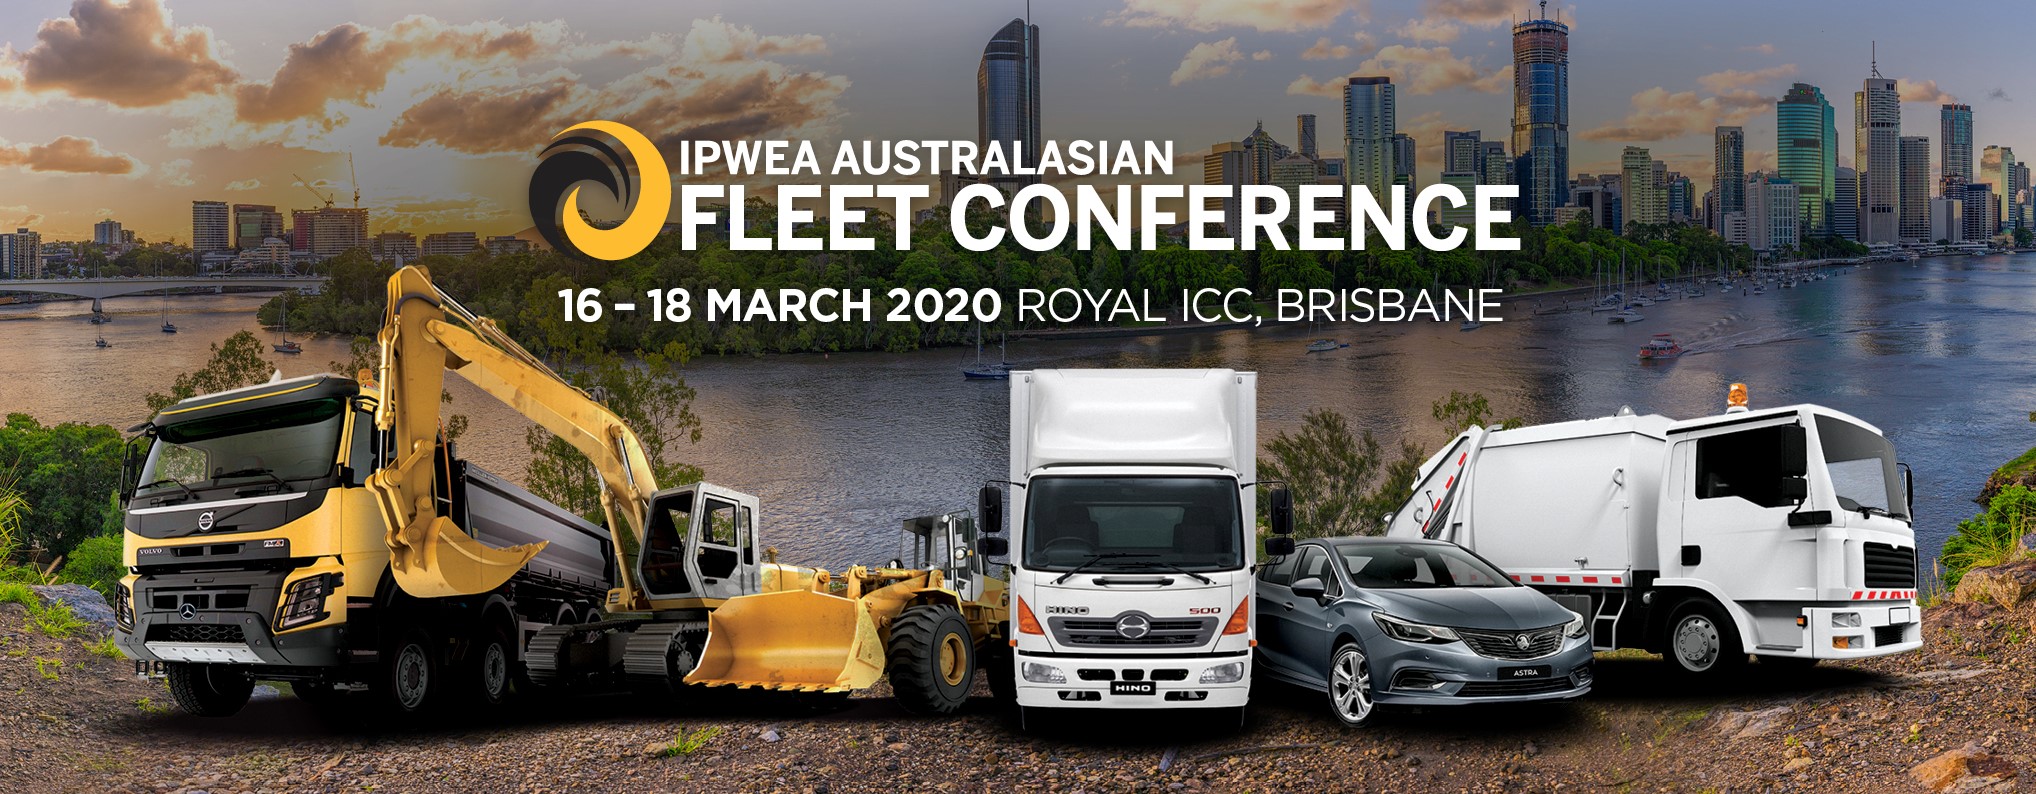 IPWEA Australasian Fleet Conference